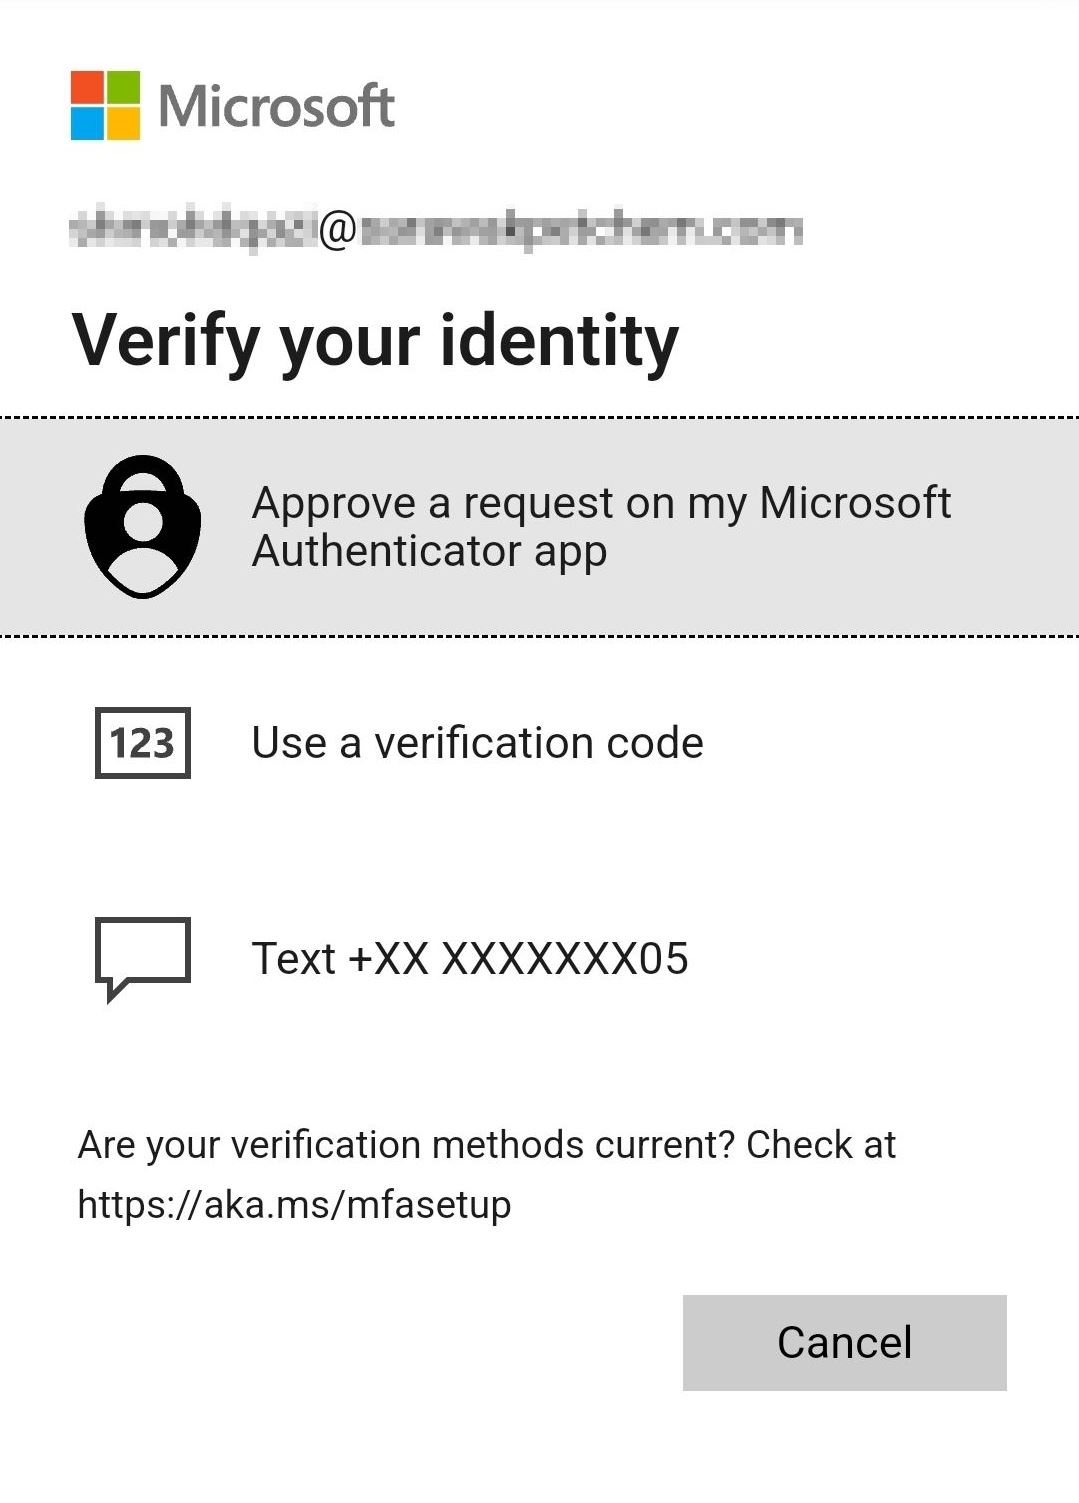 Microsoft Planner - Mobile Authenticator